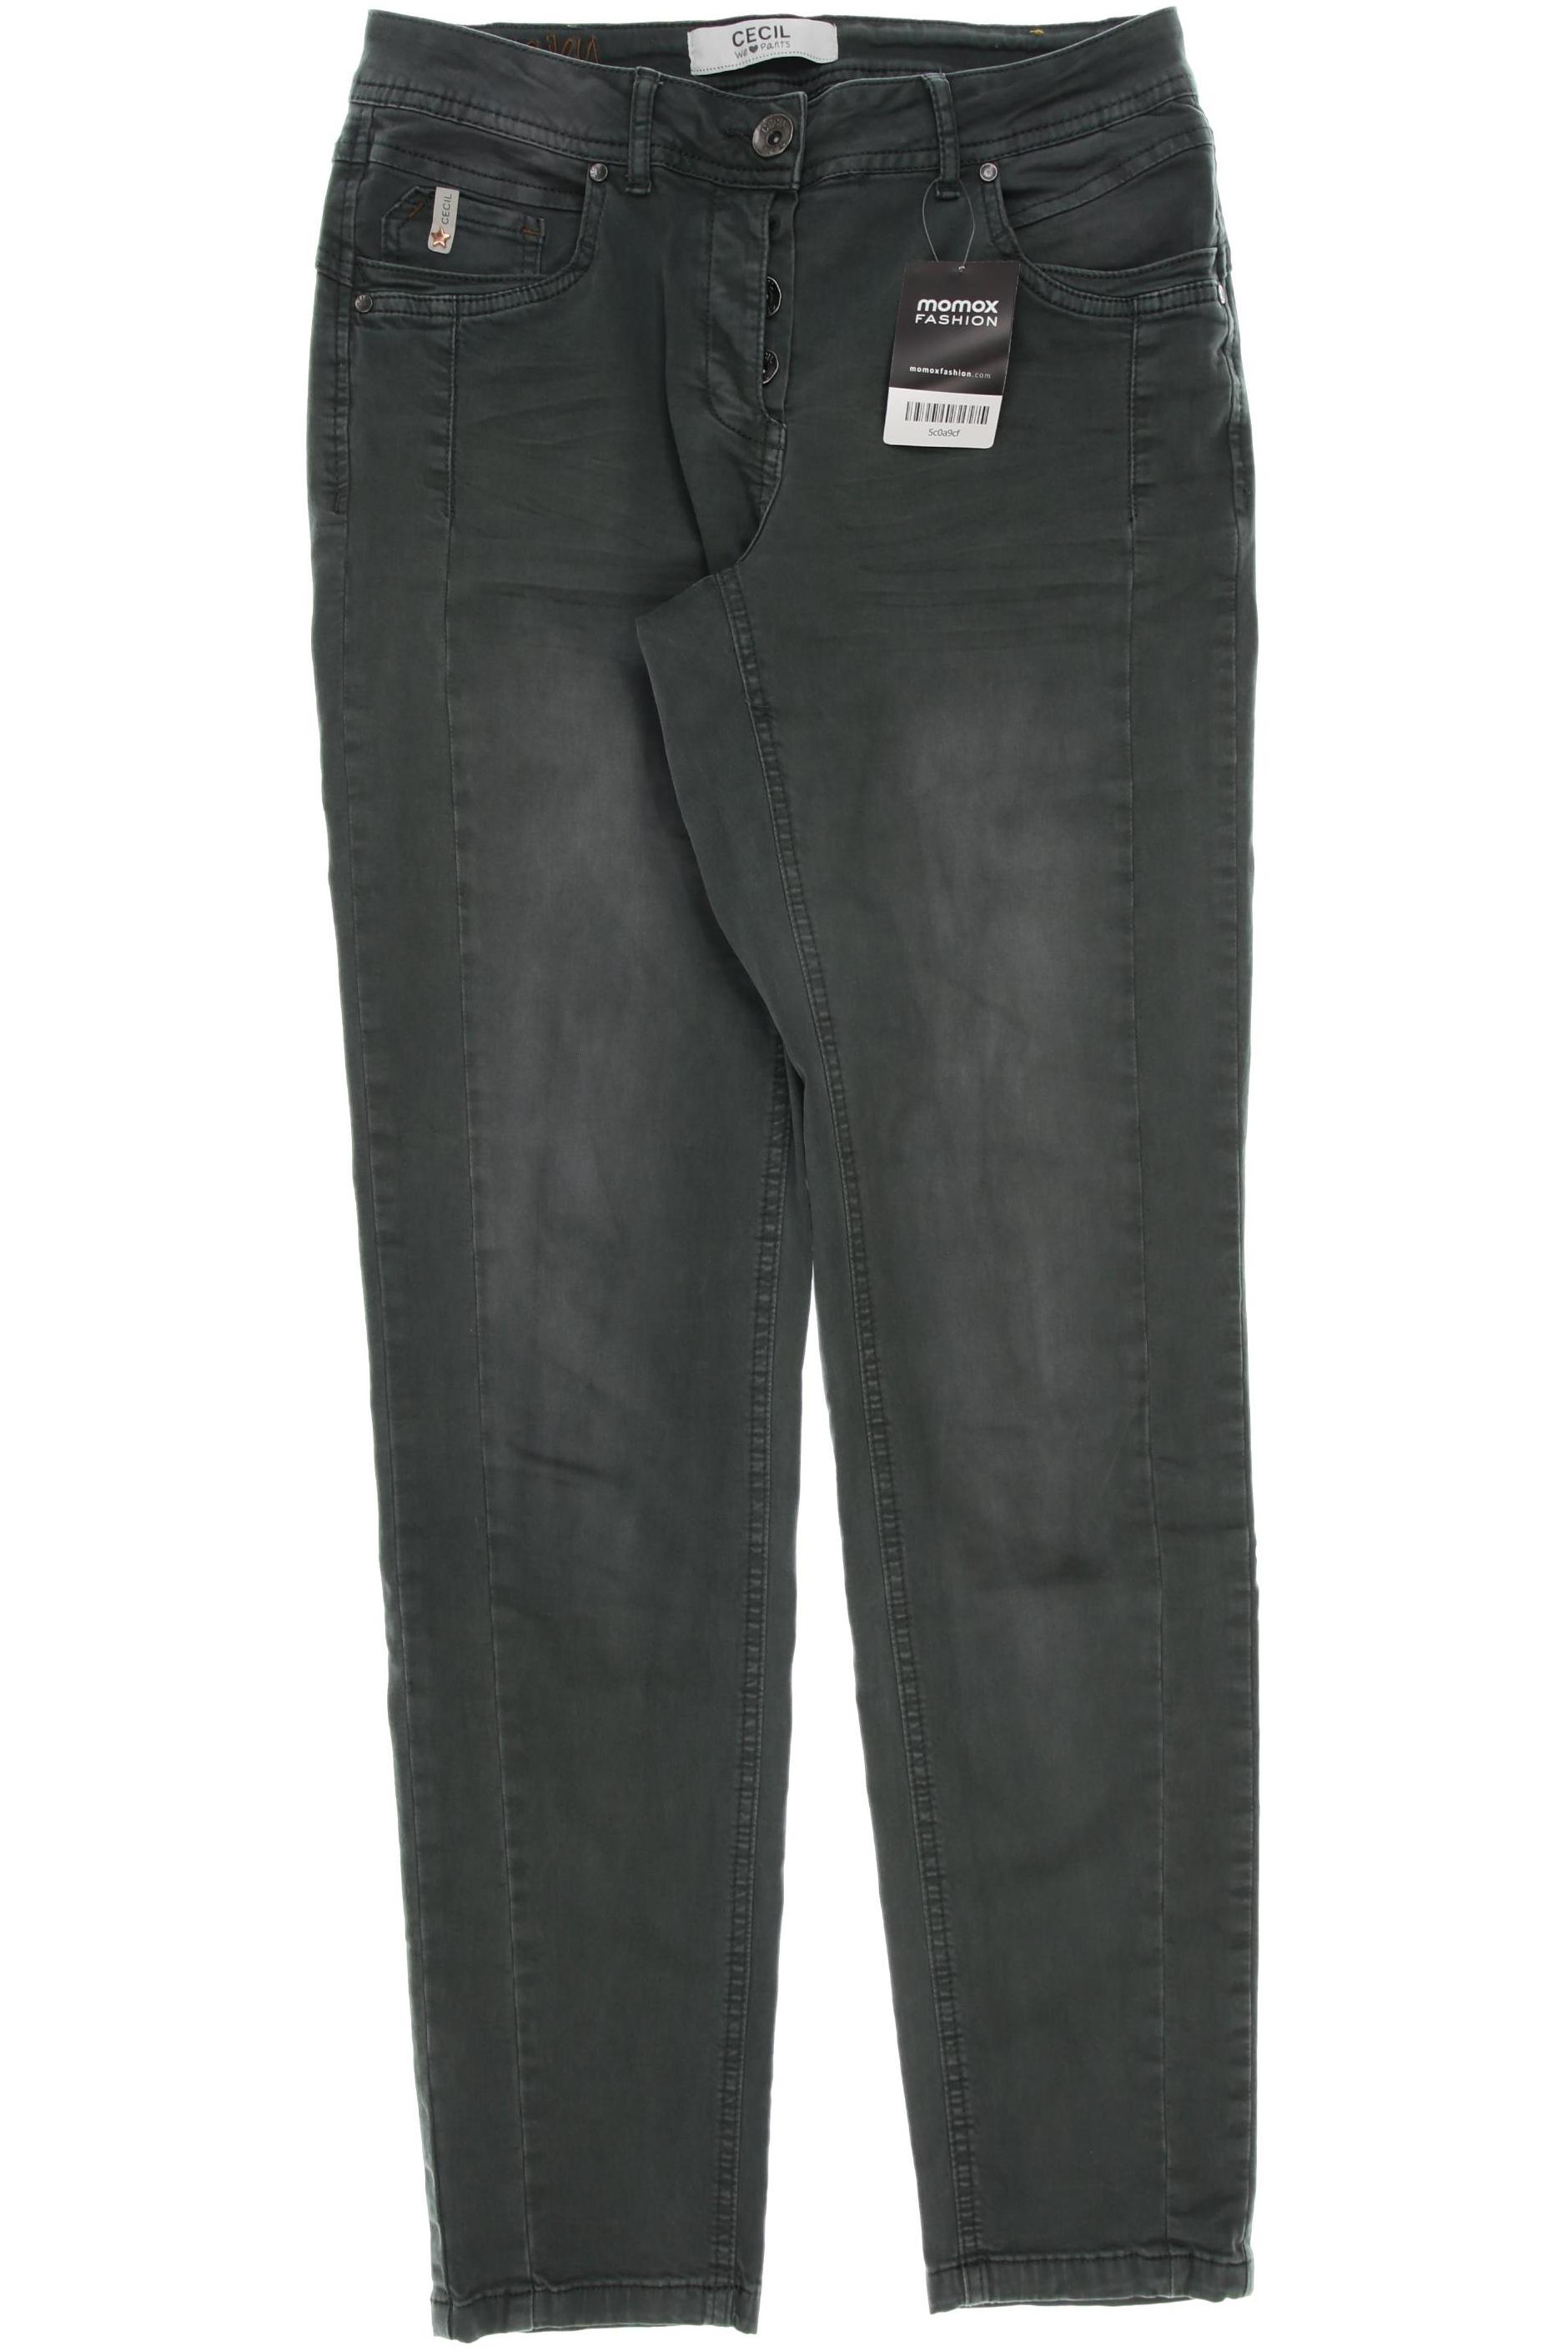 Cecil Damen Jeans, grün, Gr. 36 von cecil